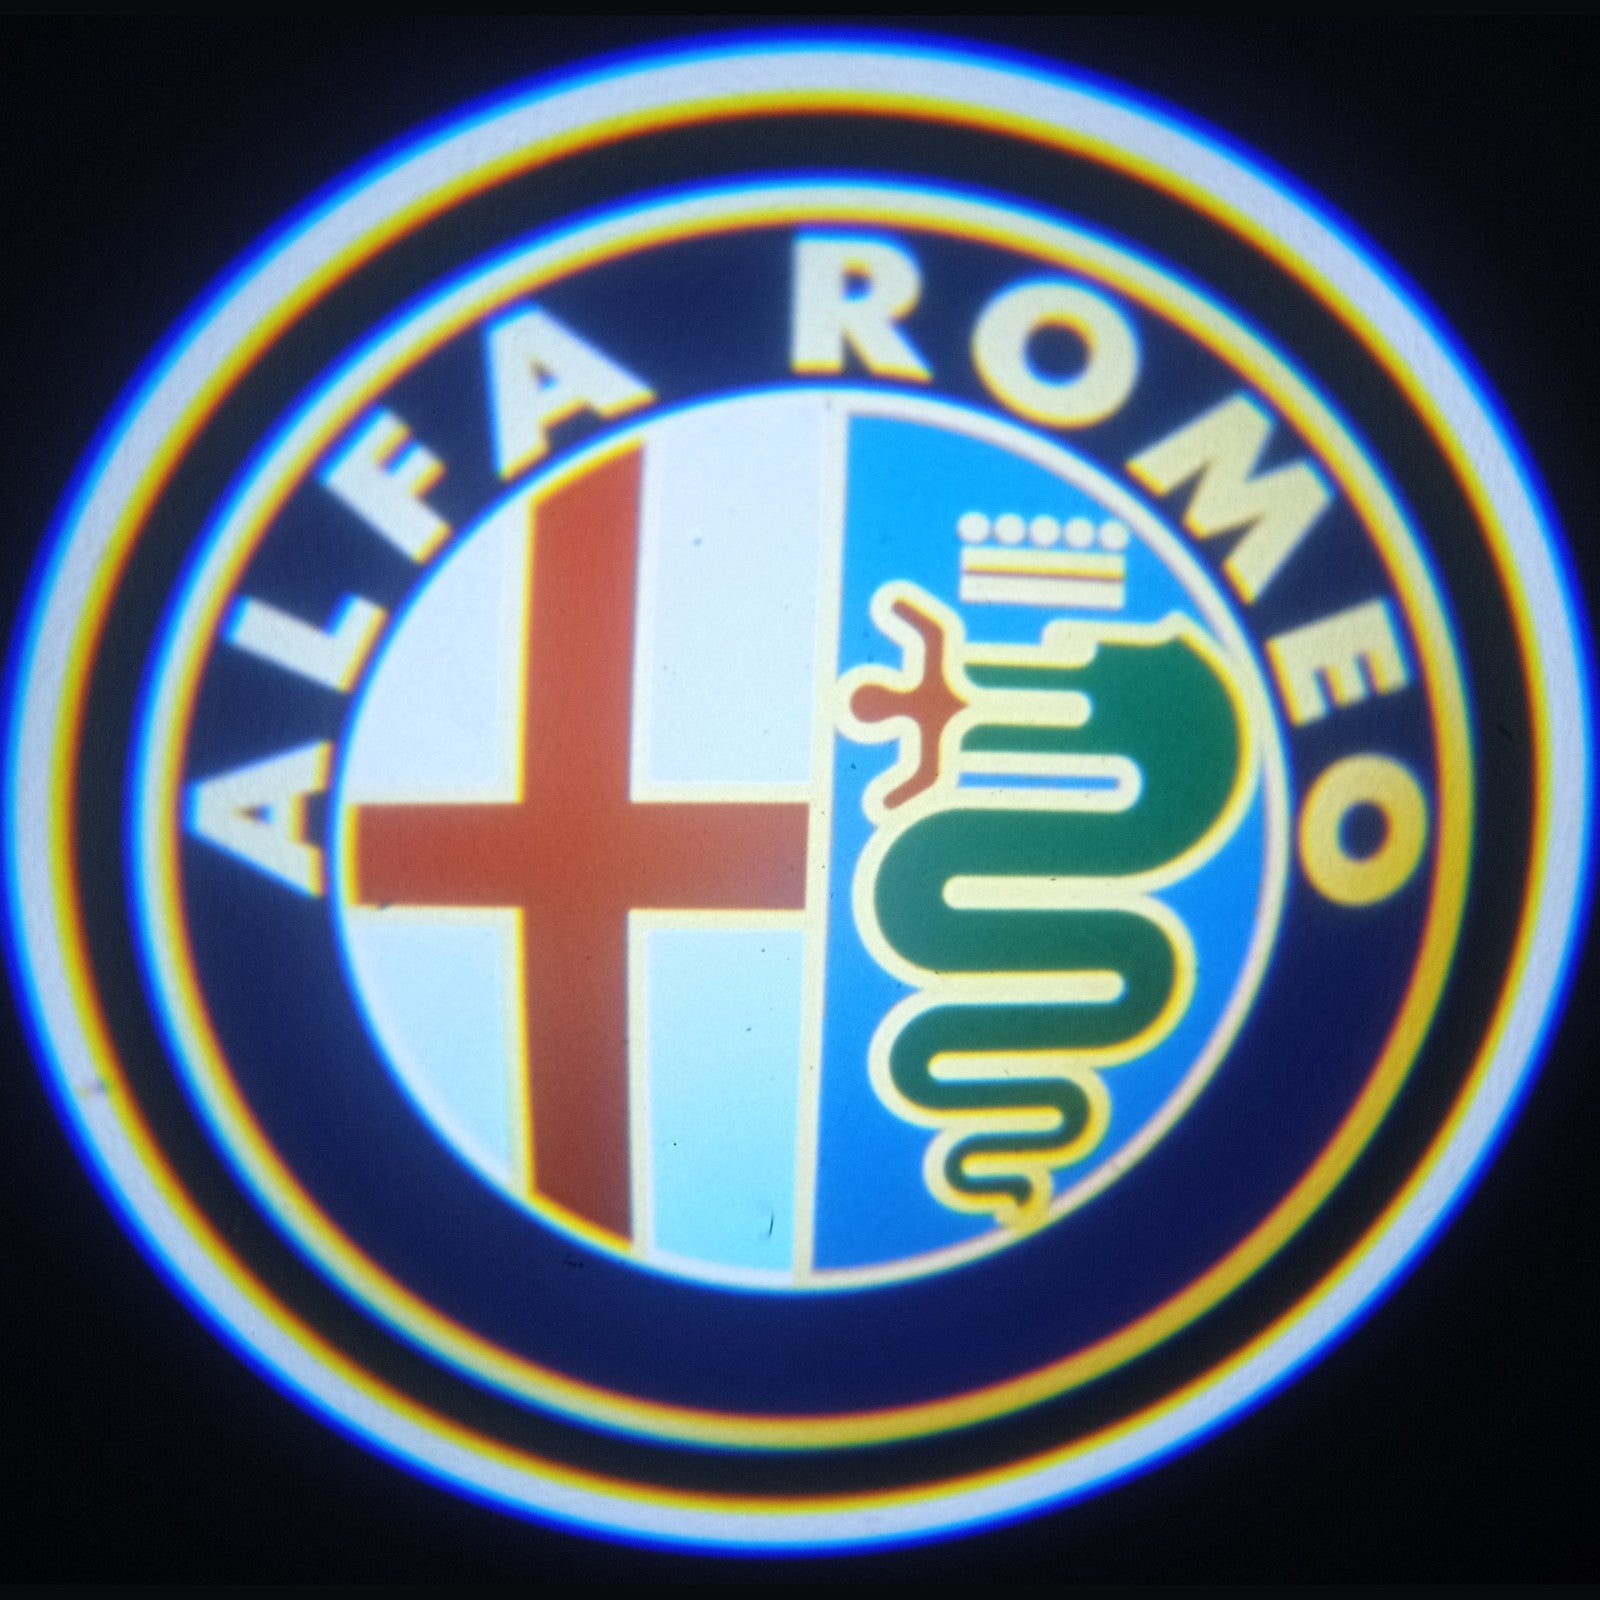 Luzes Cortesia com Logotipo marca Alfa Romeo